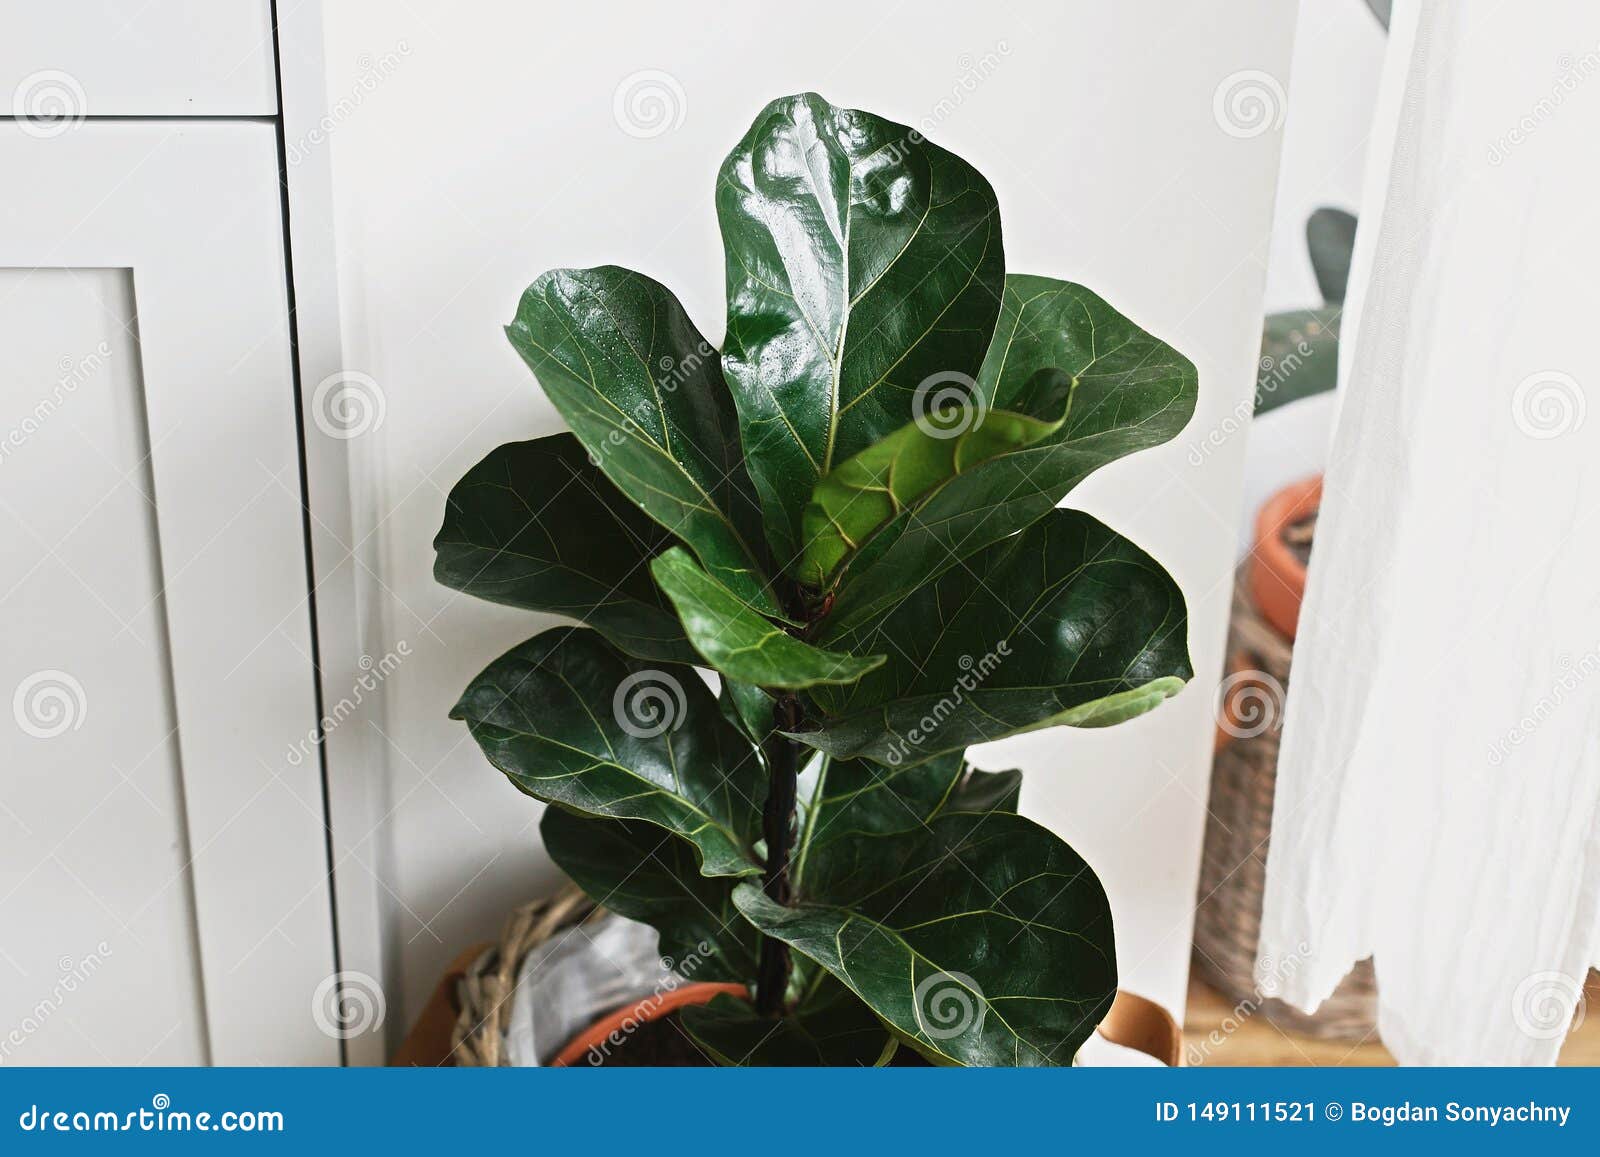 big fiddle leaf fig tree in stylish modern pot near kitchen furniture. ficus lyrata leaves, stylish plant on wooden floor in